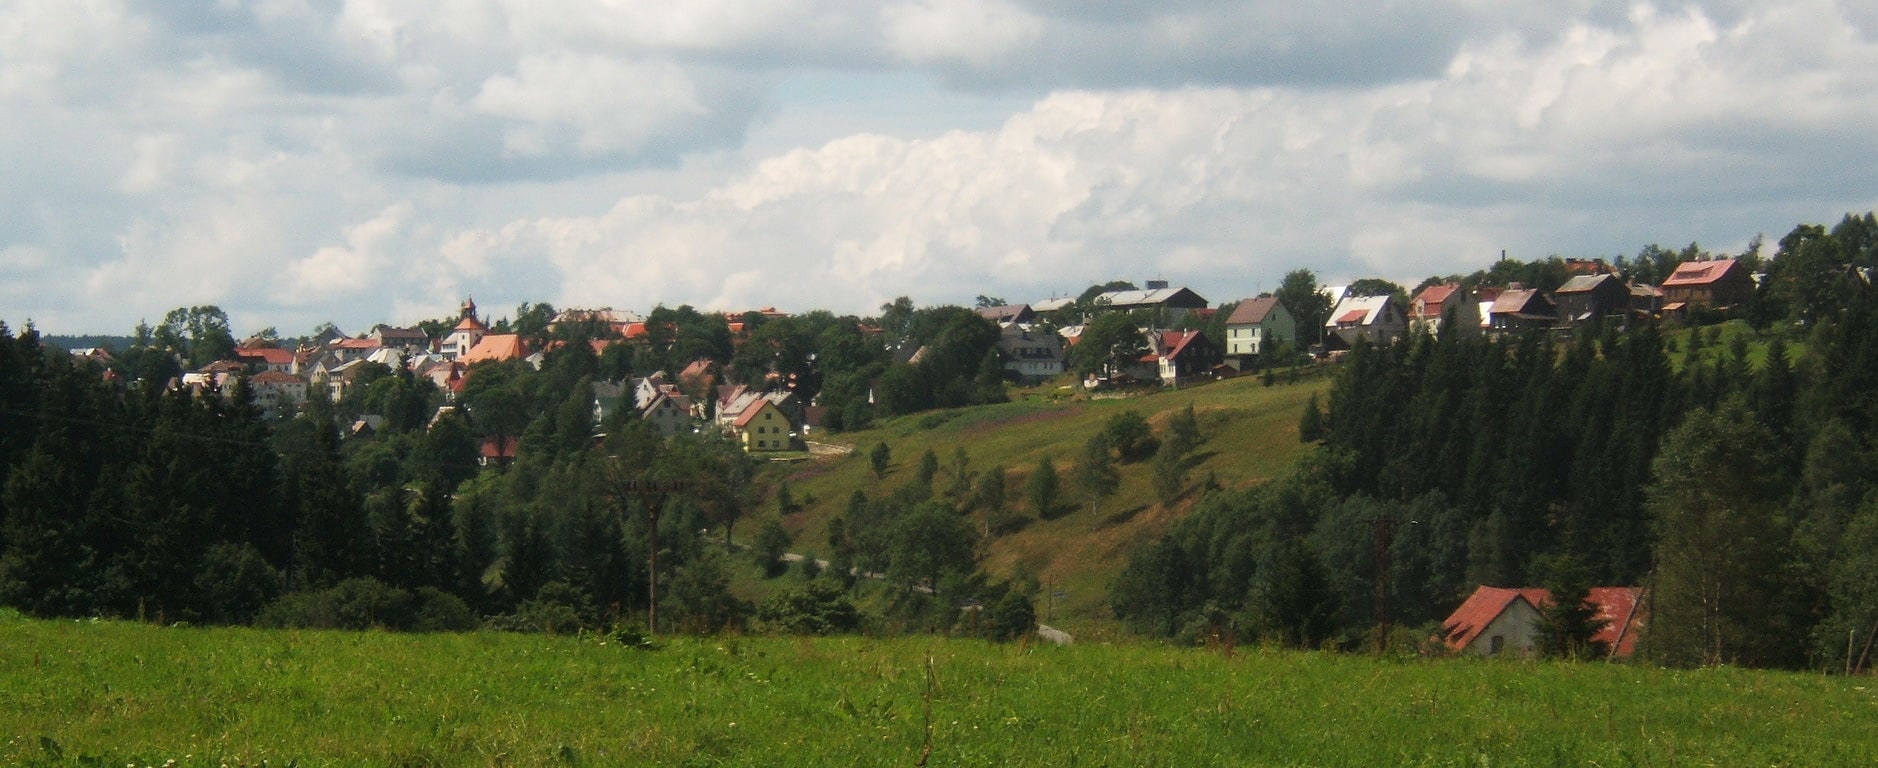 Abertamy, Czech Republic